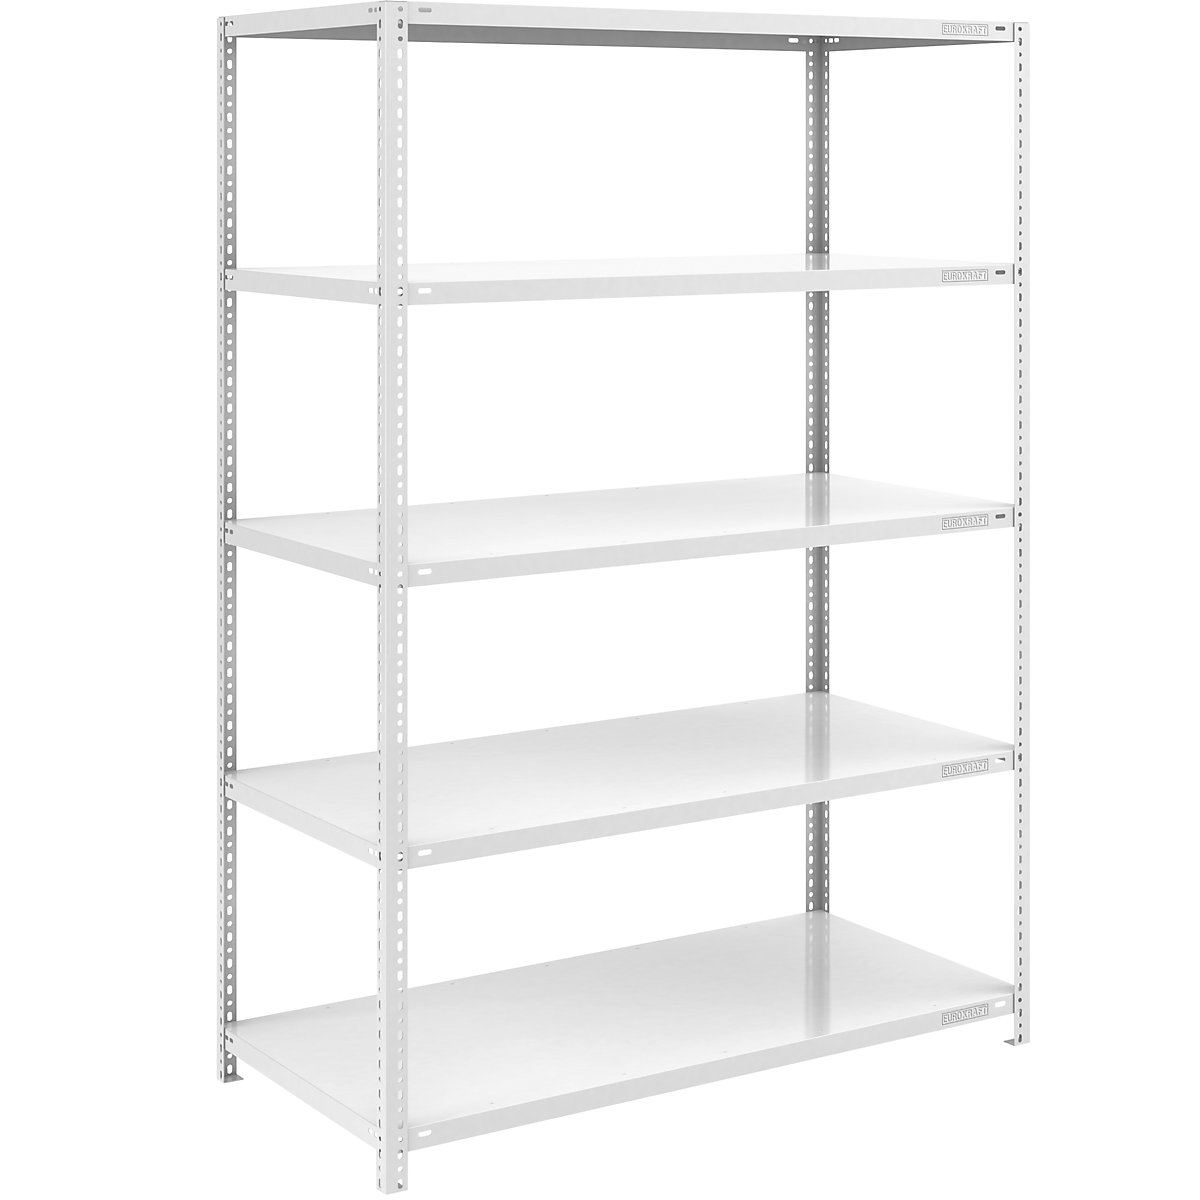 Bolt-together shelf unit, light duty, plastic coated – eurokraft pro, shelf unit height 2000 mm, shelf width 1300 mm, depth 800 mm, standard shelf unit-11